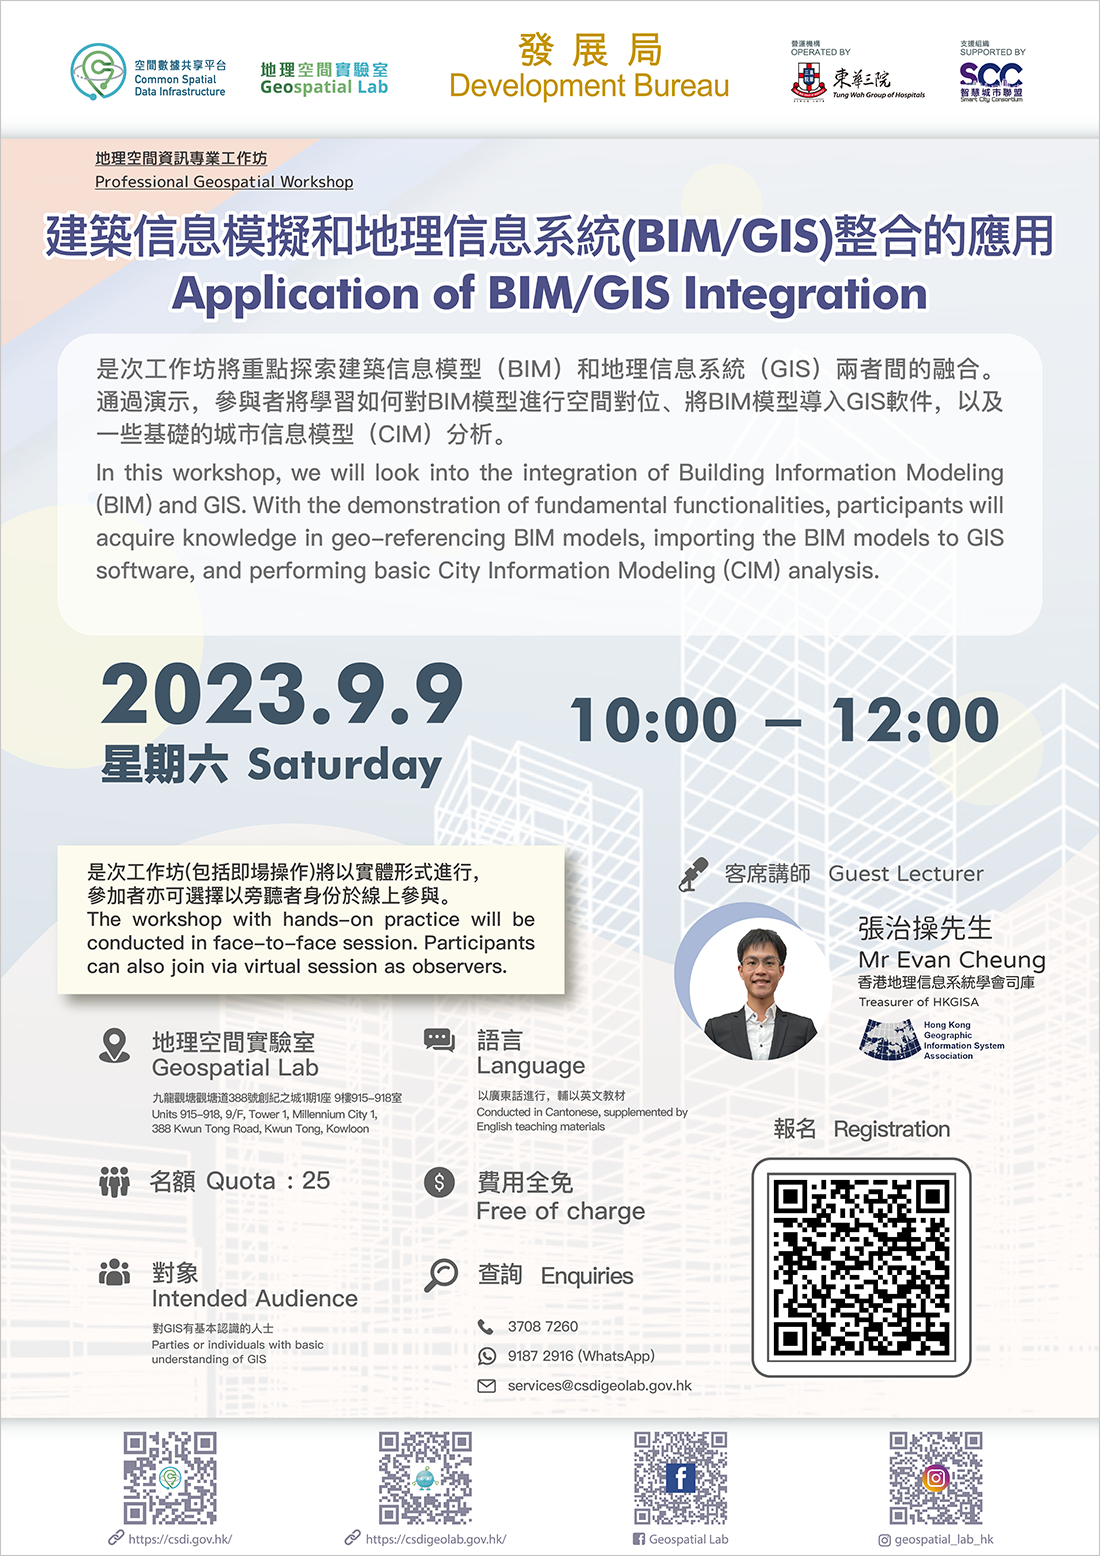 Poster of Professional Geospatial Workshop - Application of BIM/GIS Integration